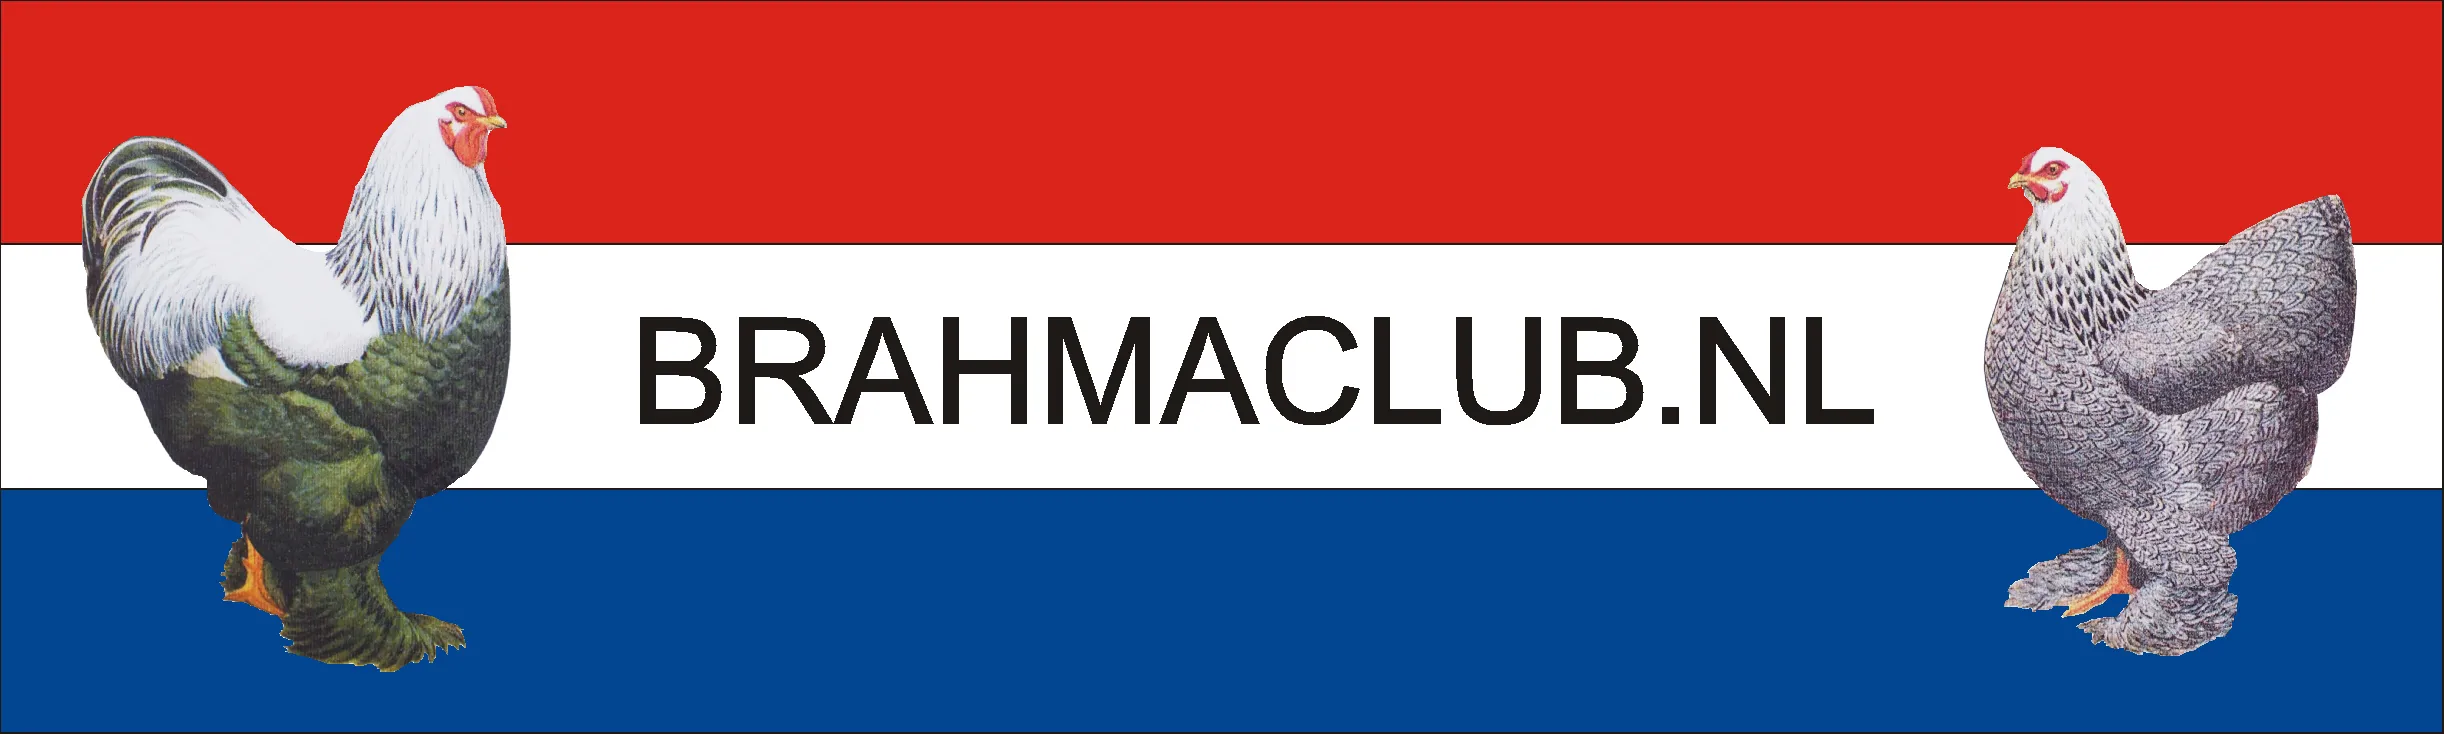 Meerzomig isabelpatrijs - Brahma club Nederland